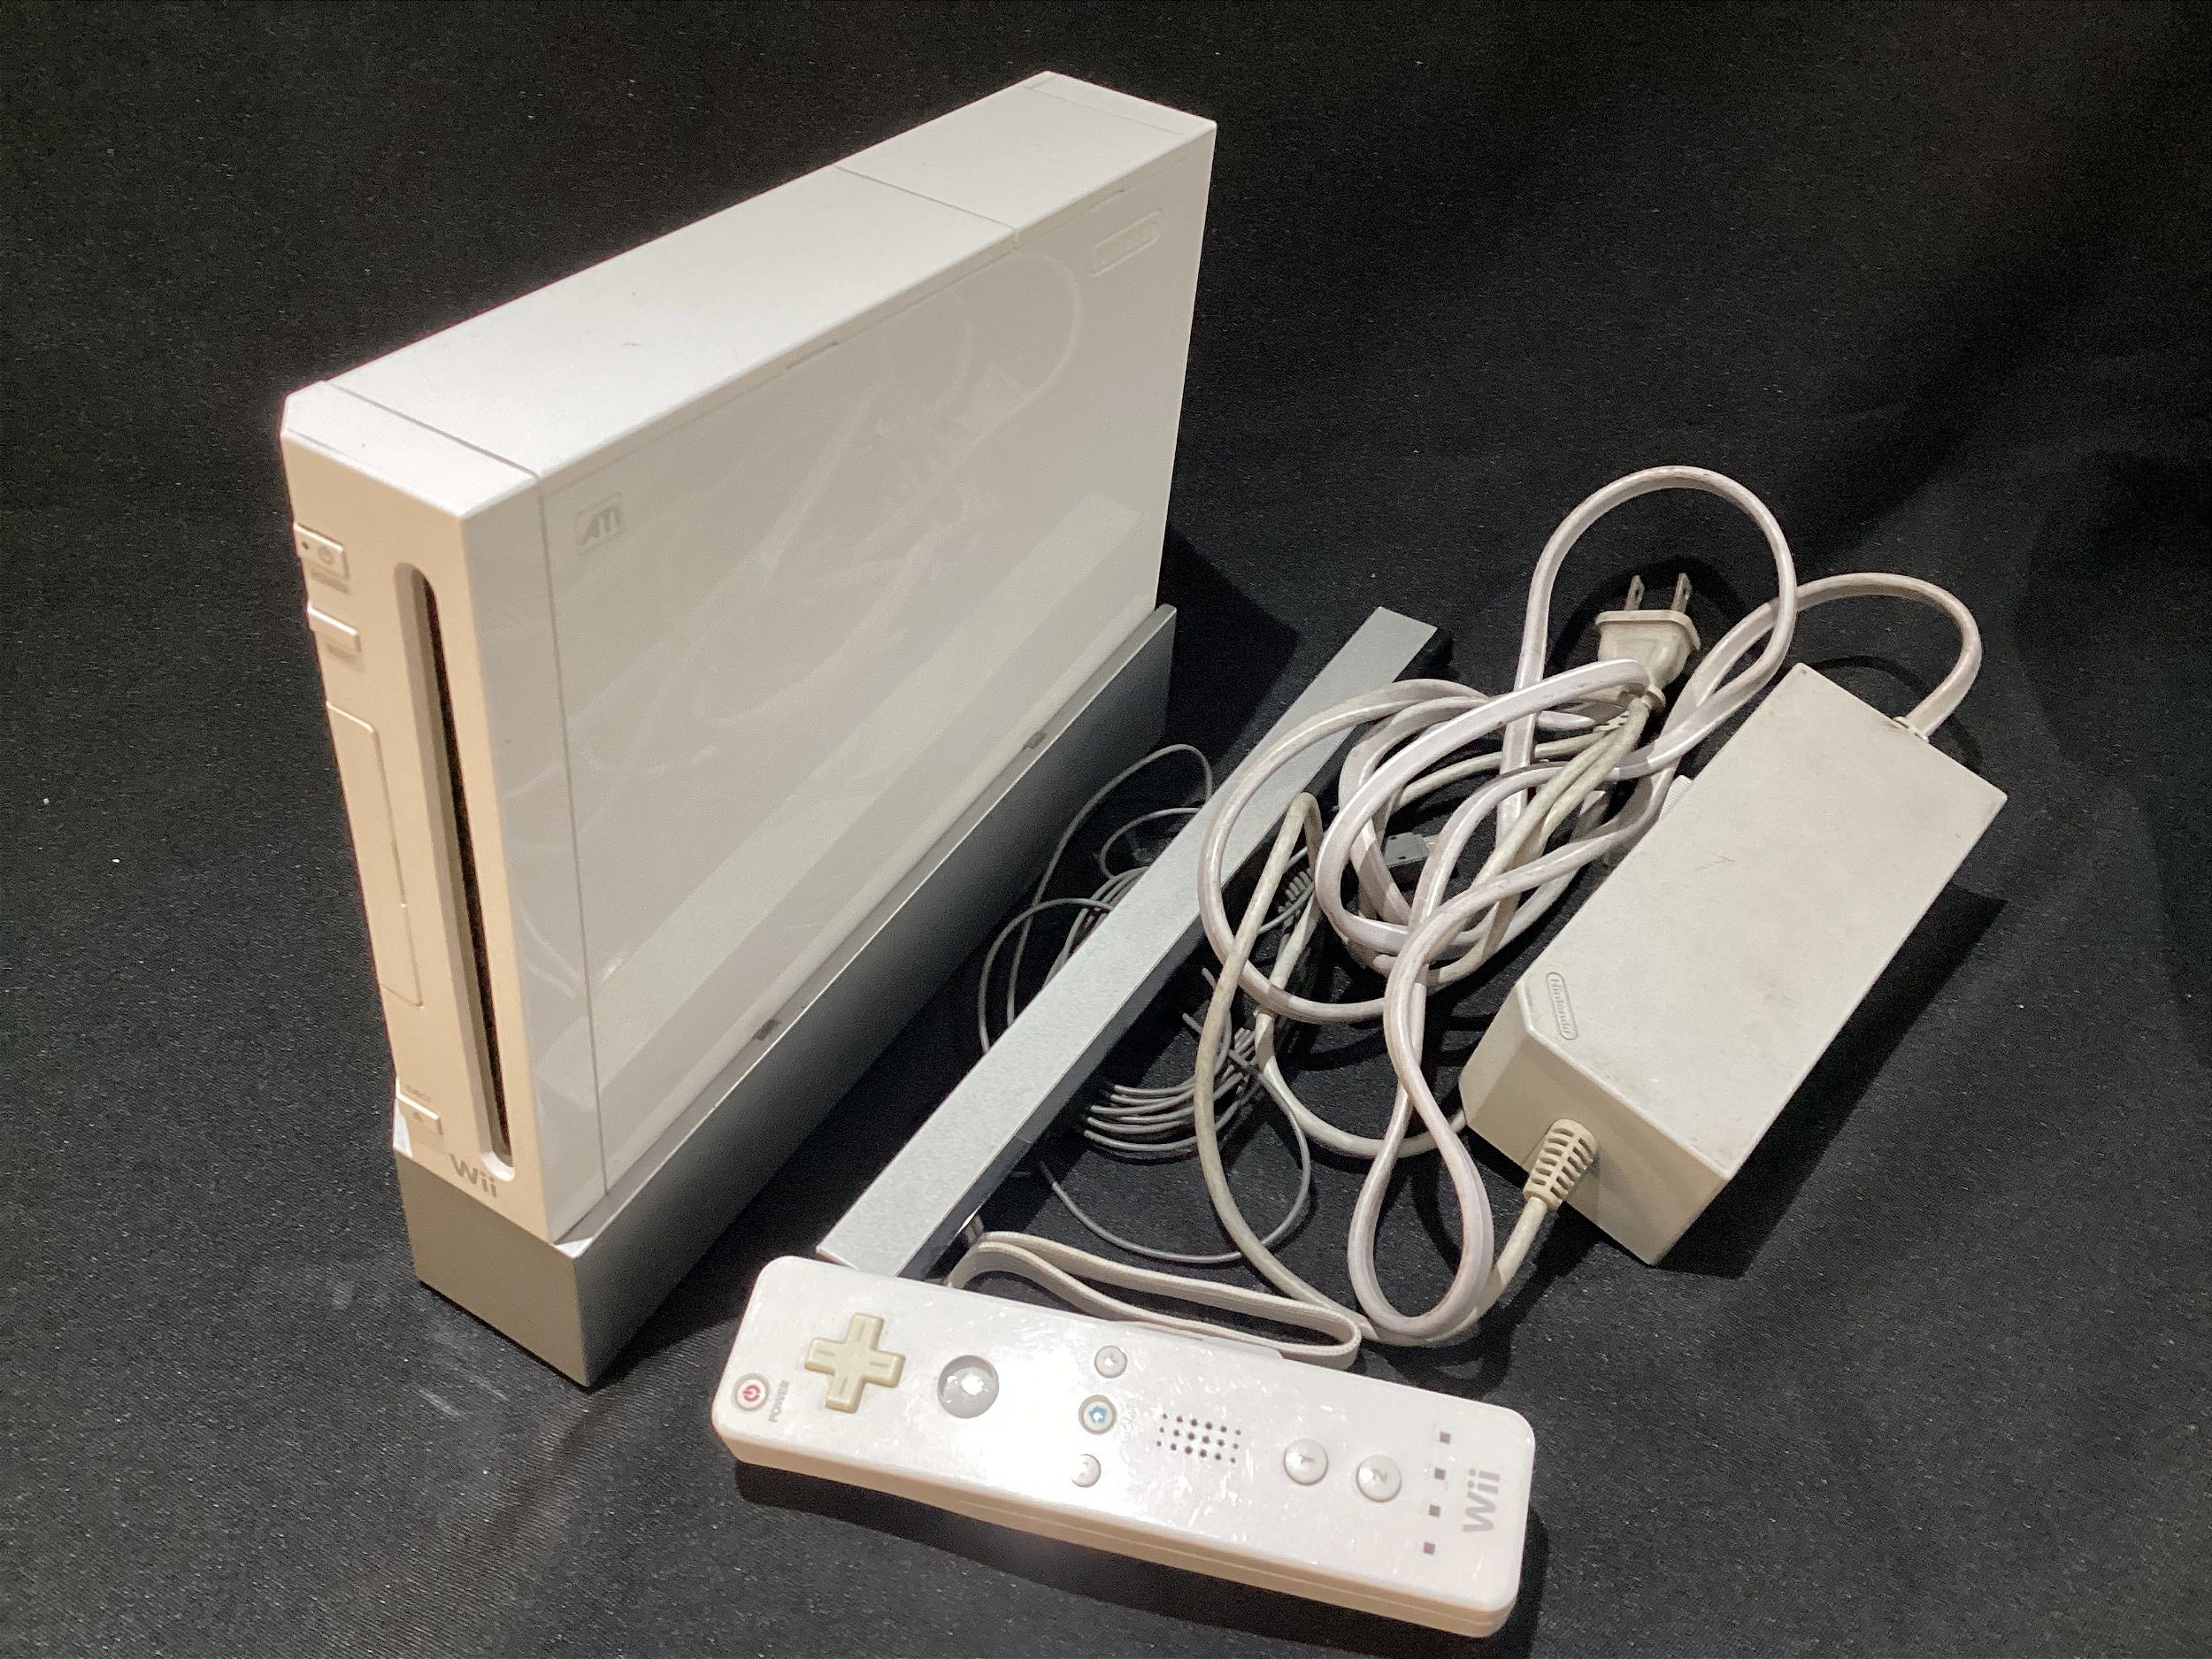 Console Nintendo Wii Branco